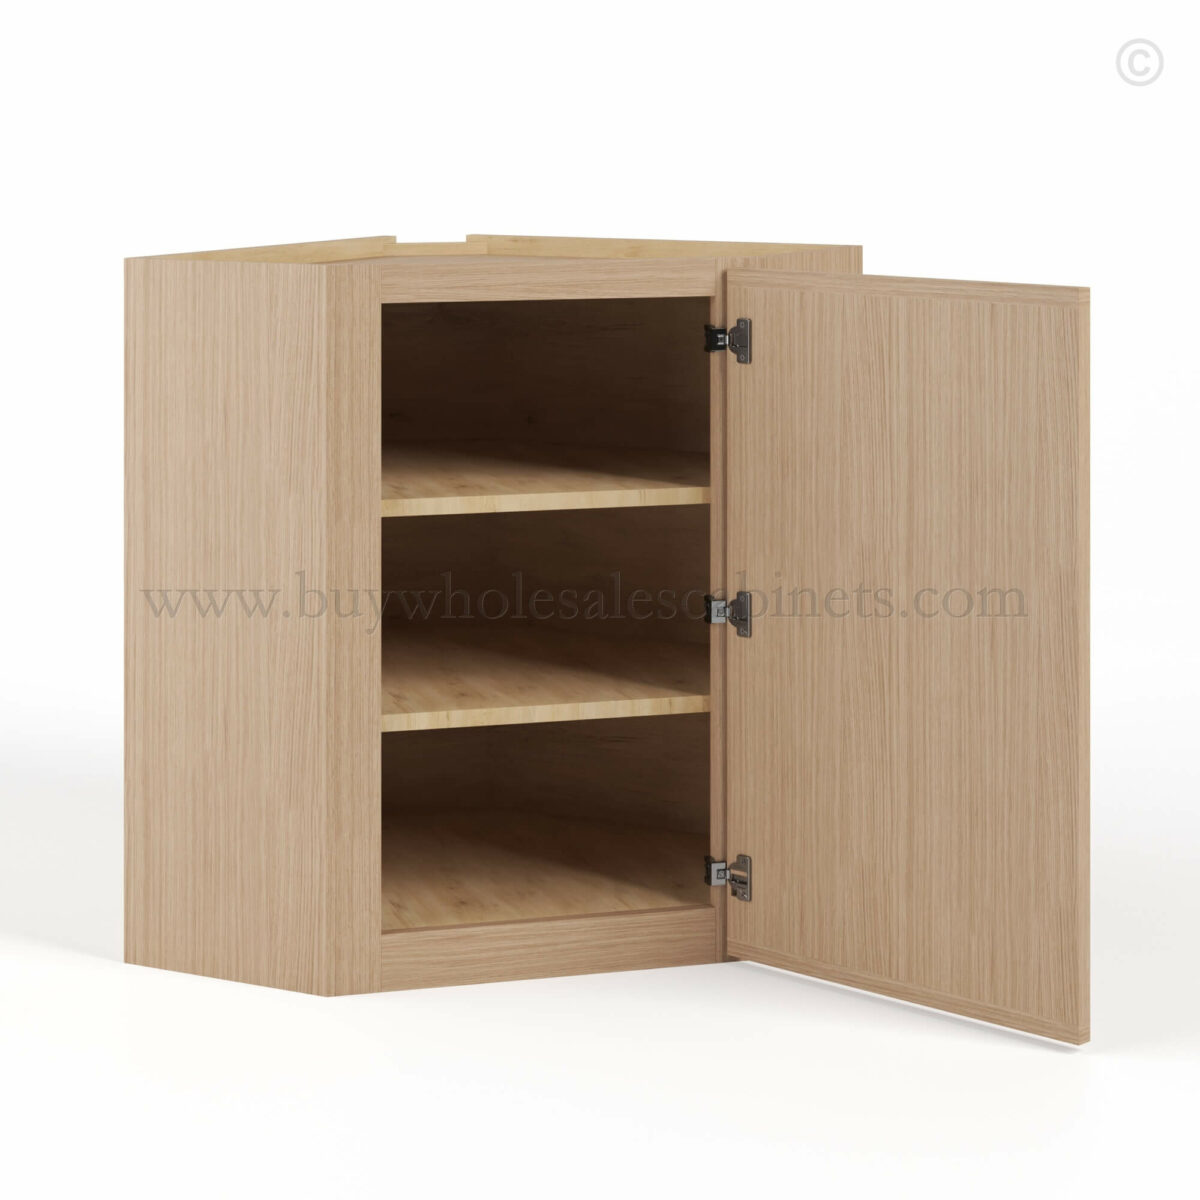 Slim Oak Shaker Diagonal Corner Wall Cabinet, rta cabinets, wholesale cabinets